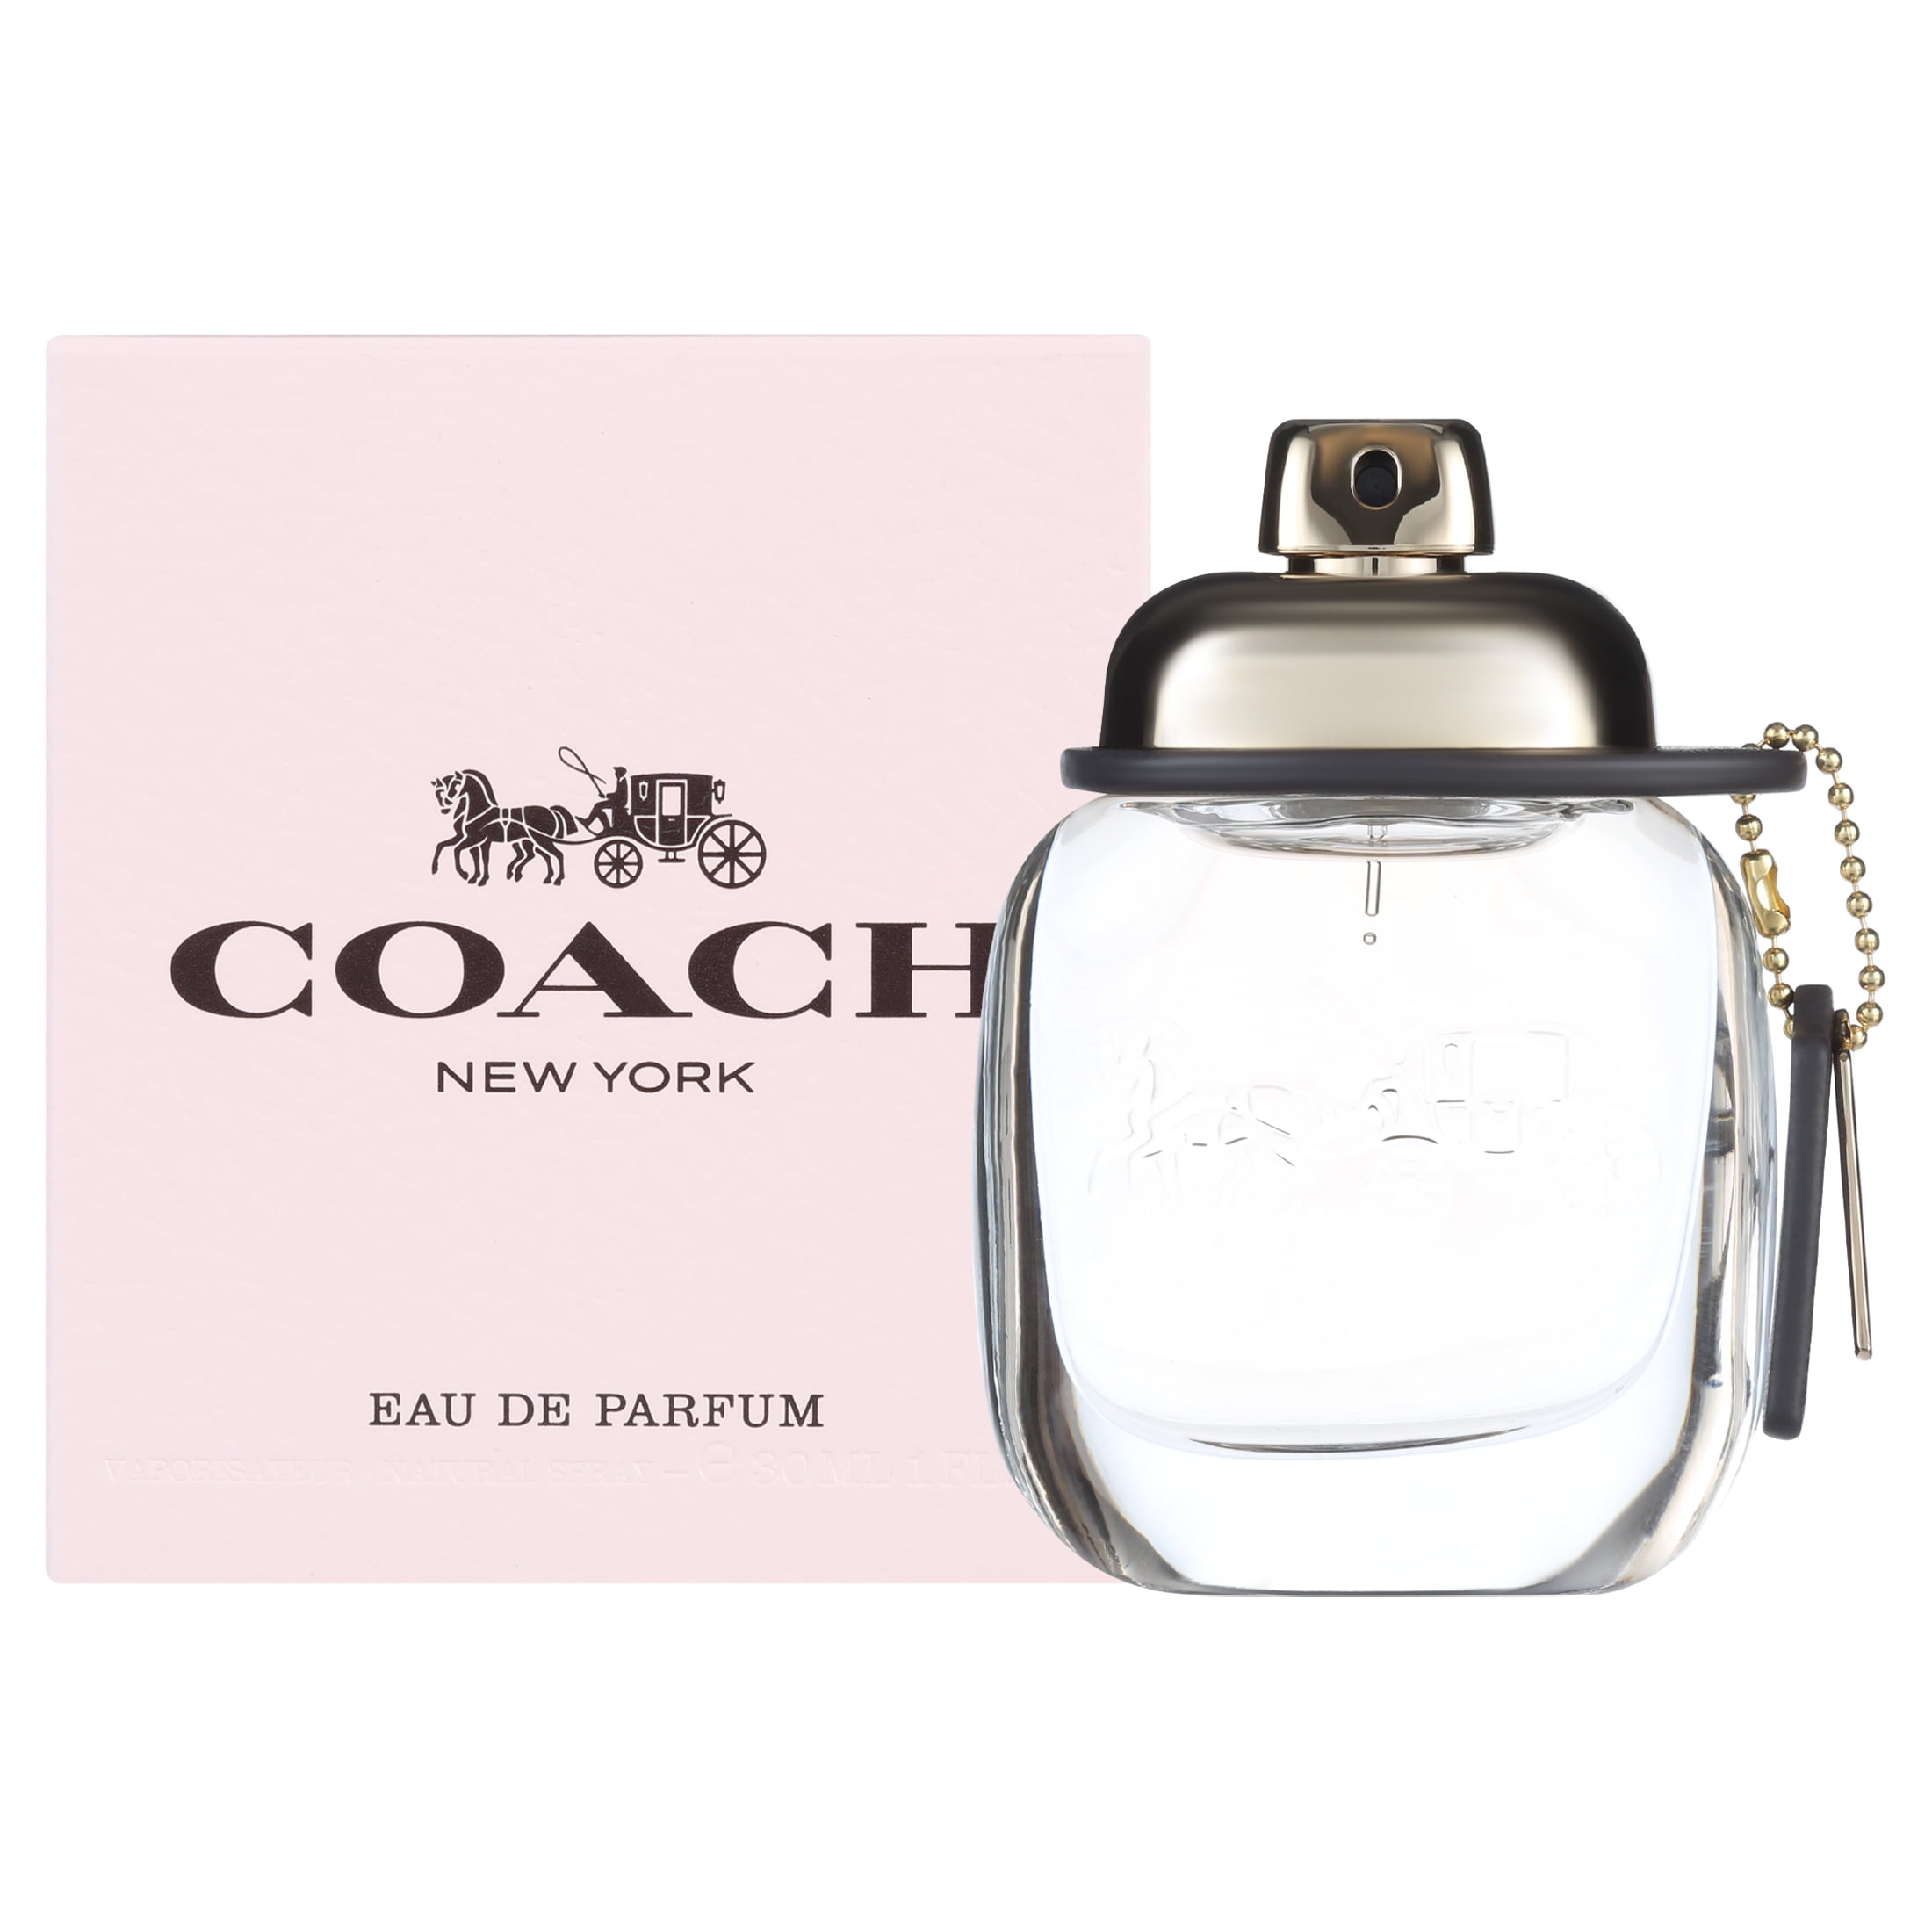 Coach New York Eau De Parfum, Perfume for Women, 1 oz 